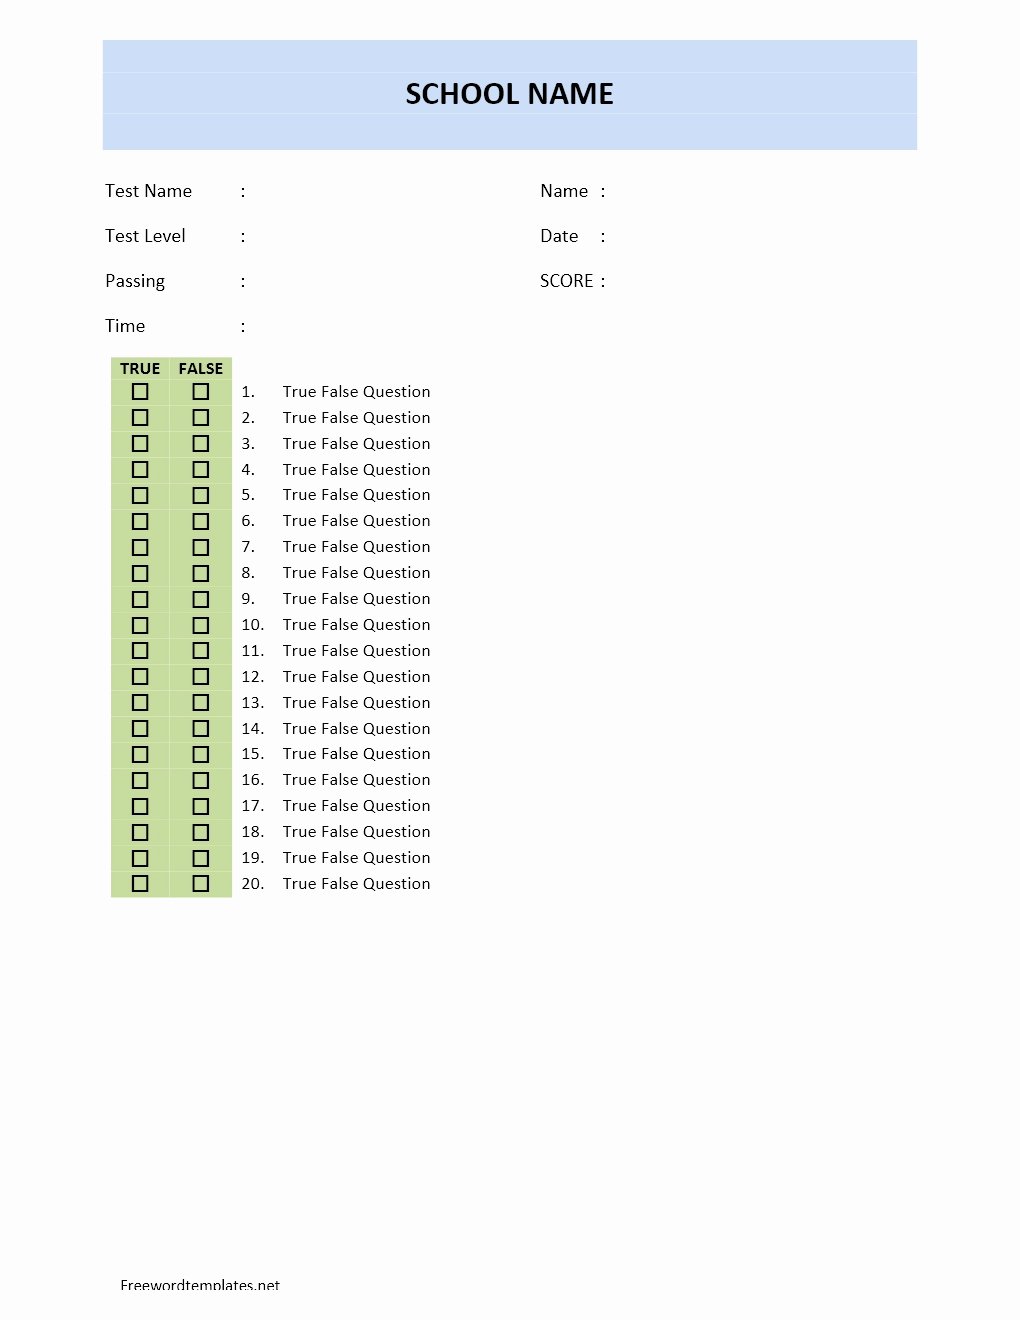 Golf Practice Schedule Template Beautiful True False Quiz Sheet